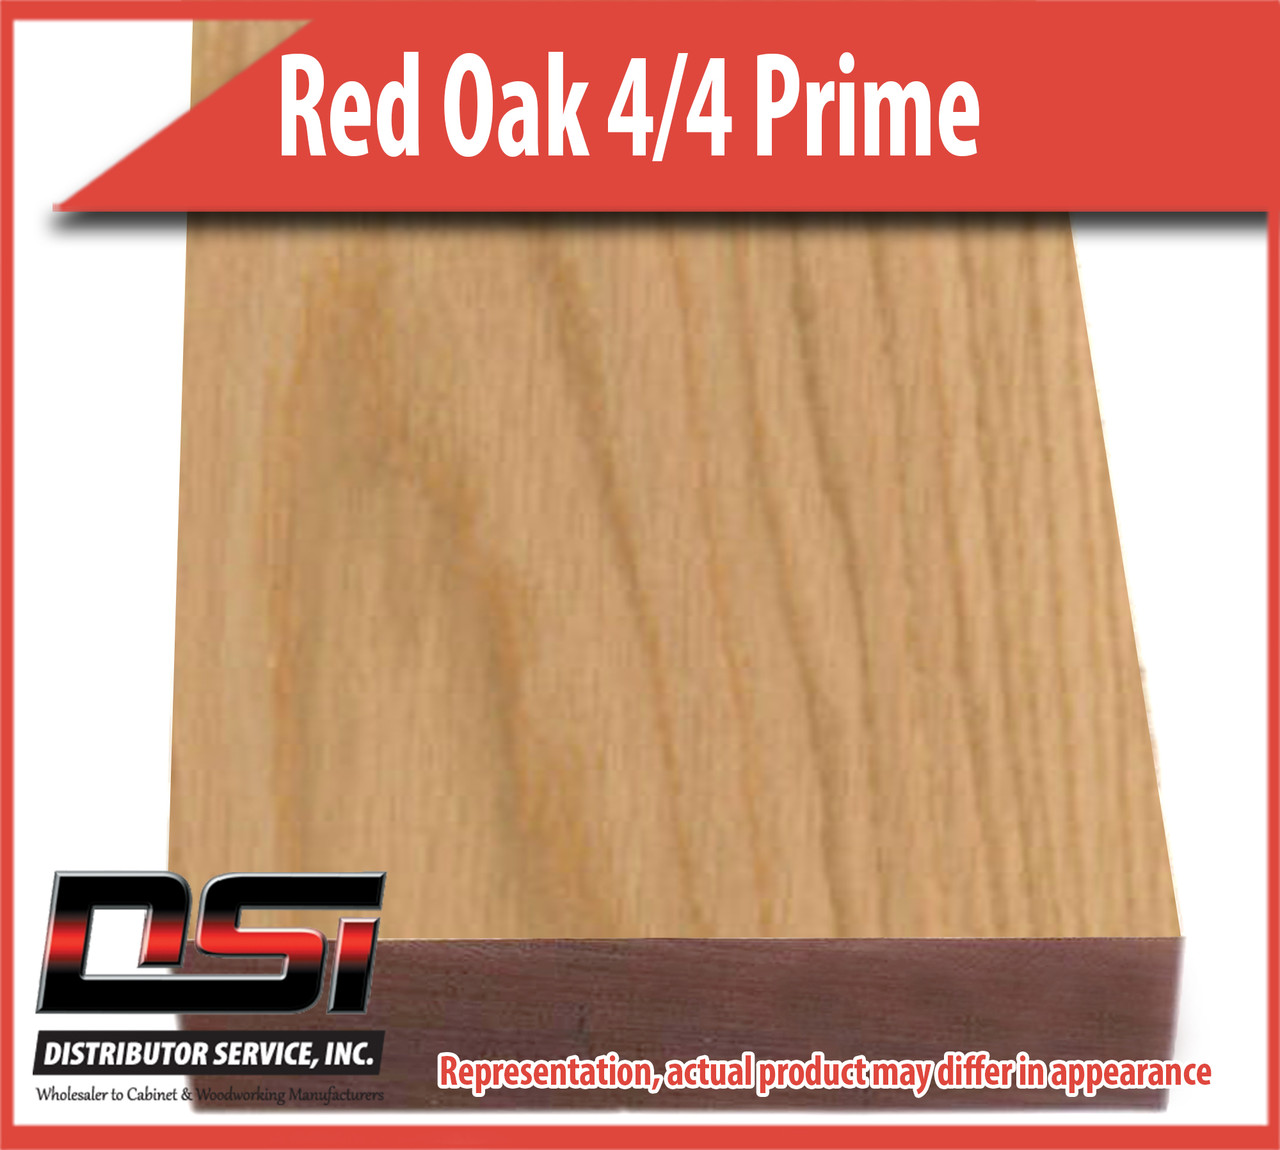 Domestic Hardwood Lumber Red Oak 4/4 Prime Color Sort 15/16 11-12